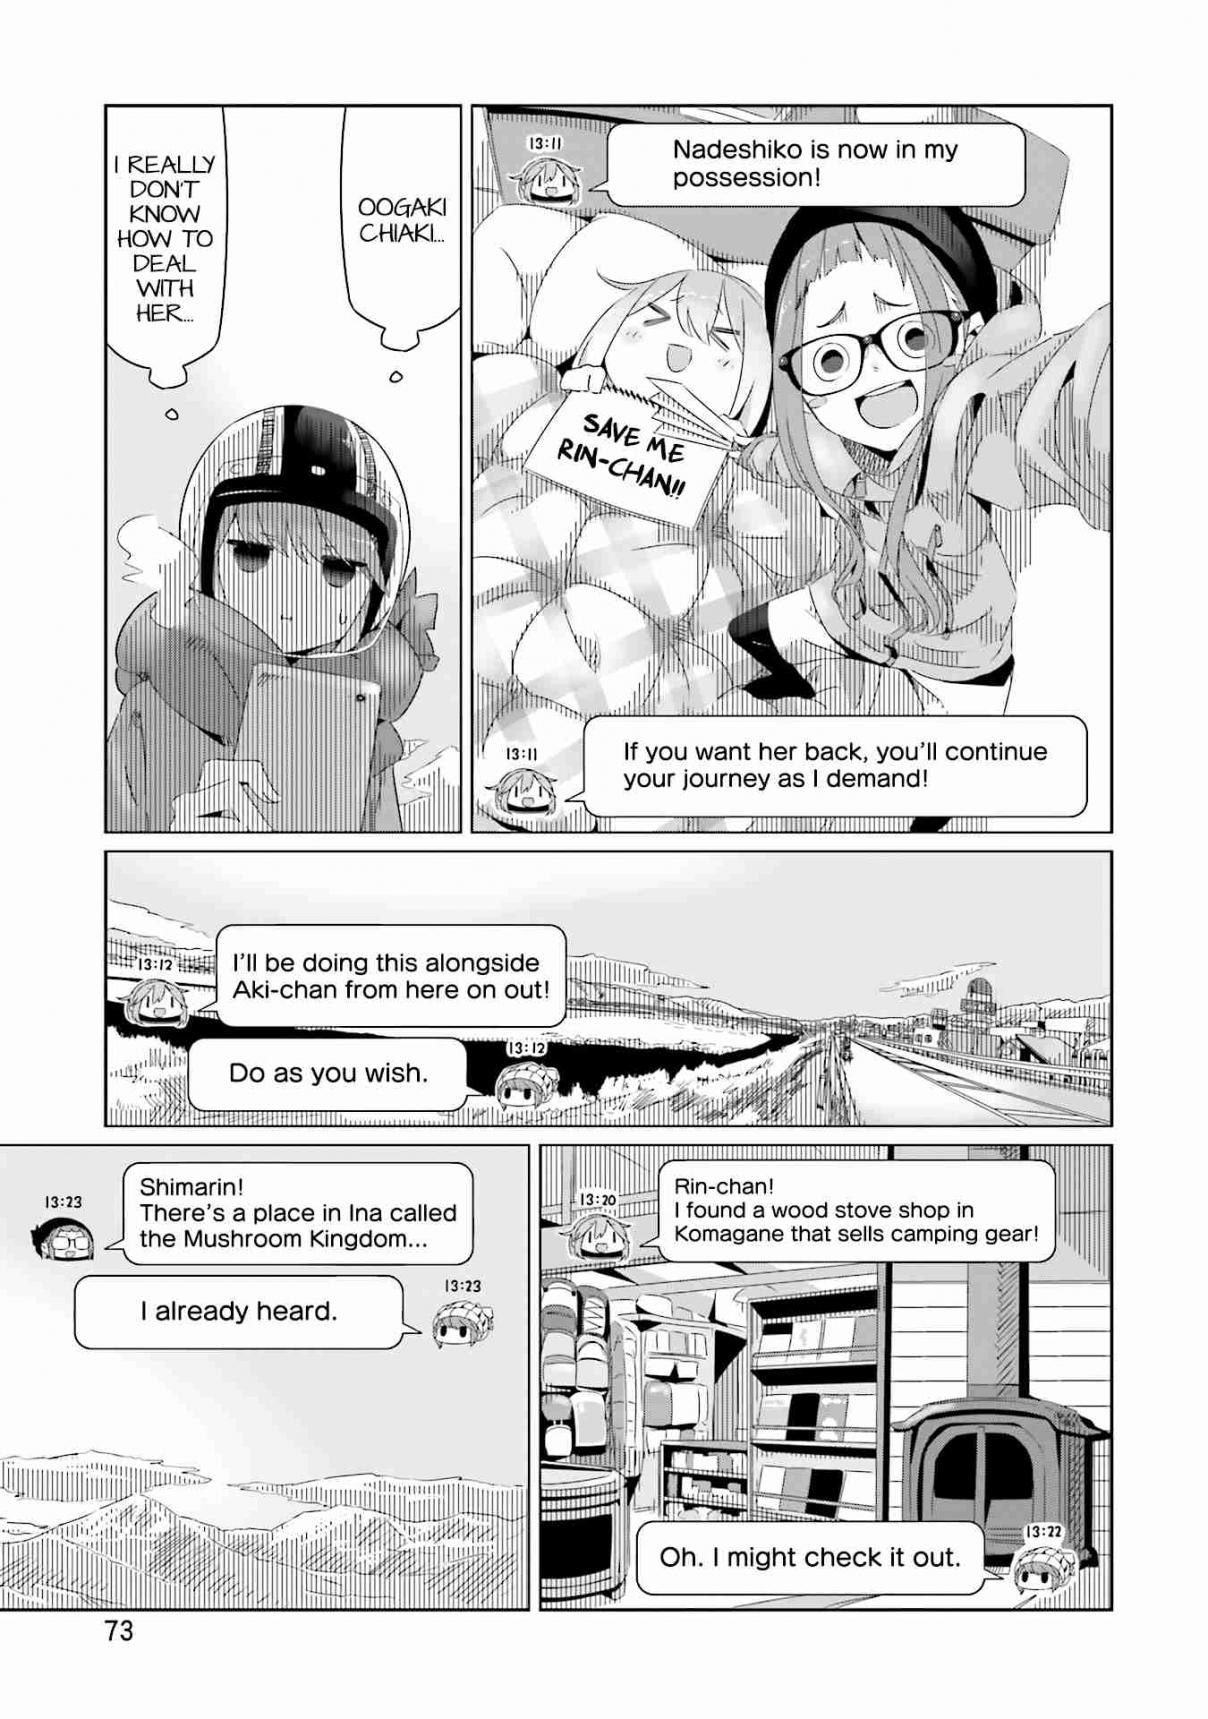 Yurucamp Vol. 3 Ch. 16 Recommended! Nadeshiko Navi!